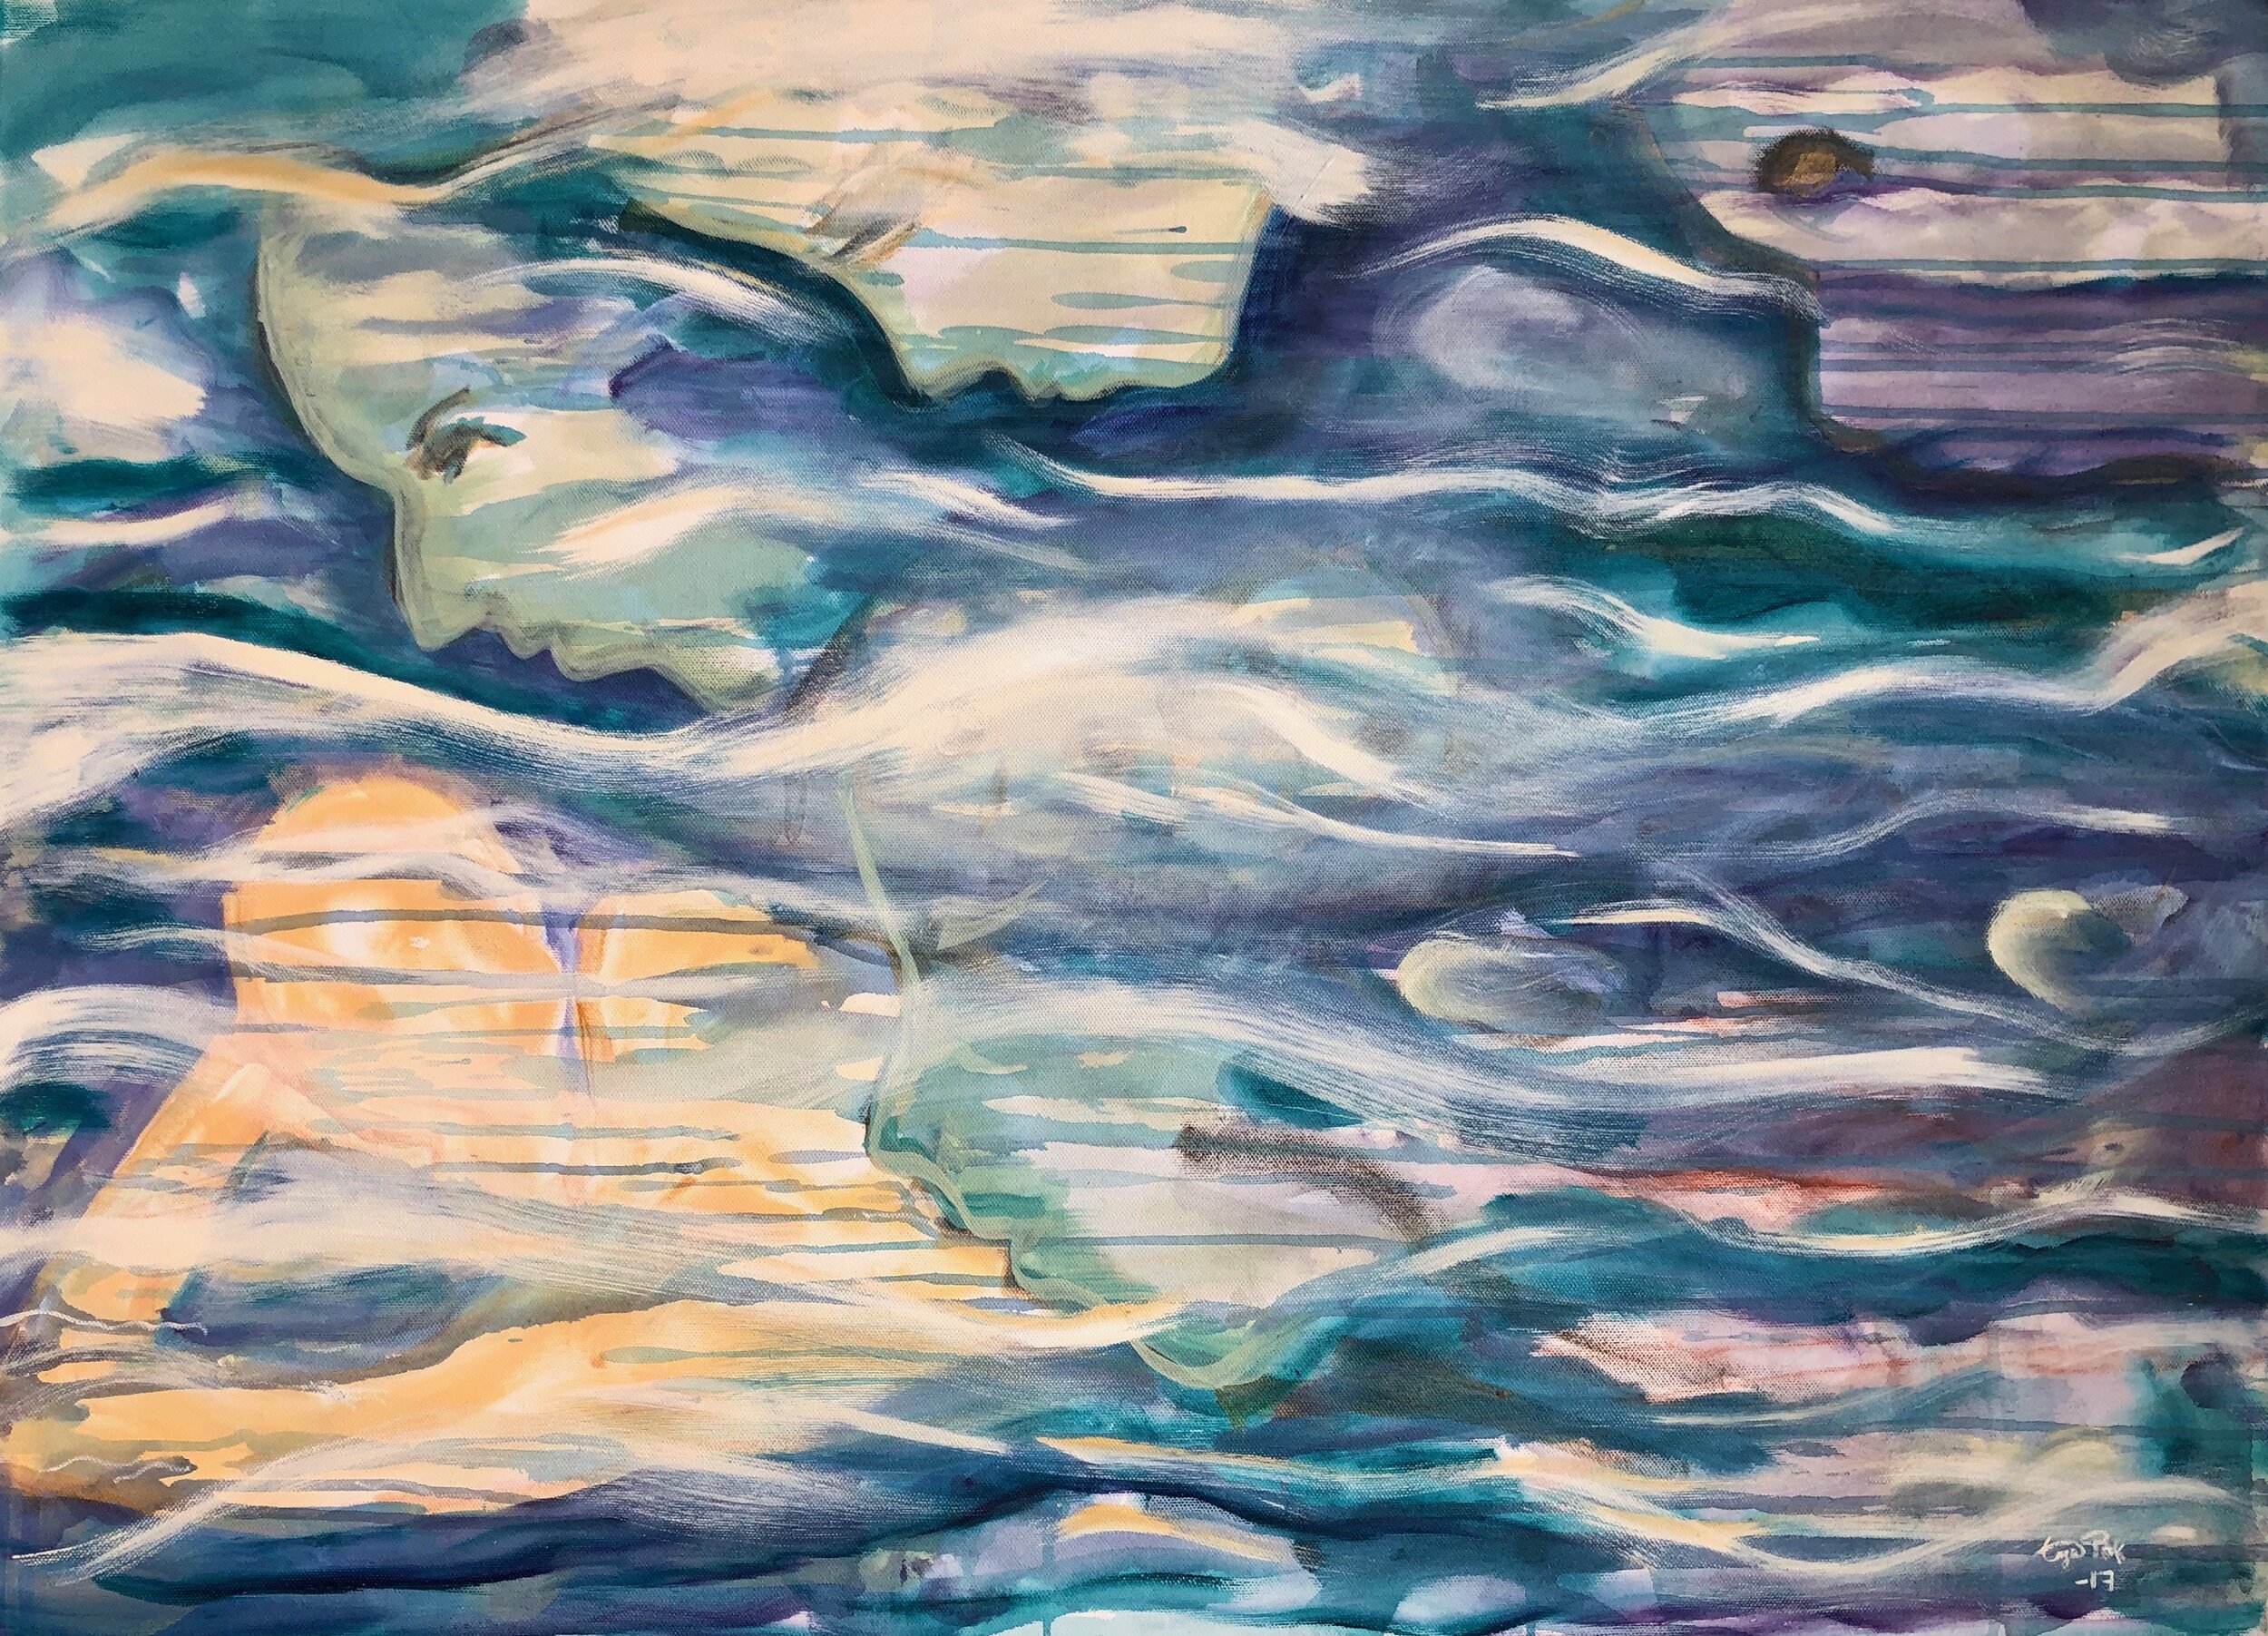  NAIADS, 2017, oil on canvas, 65x90cm 